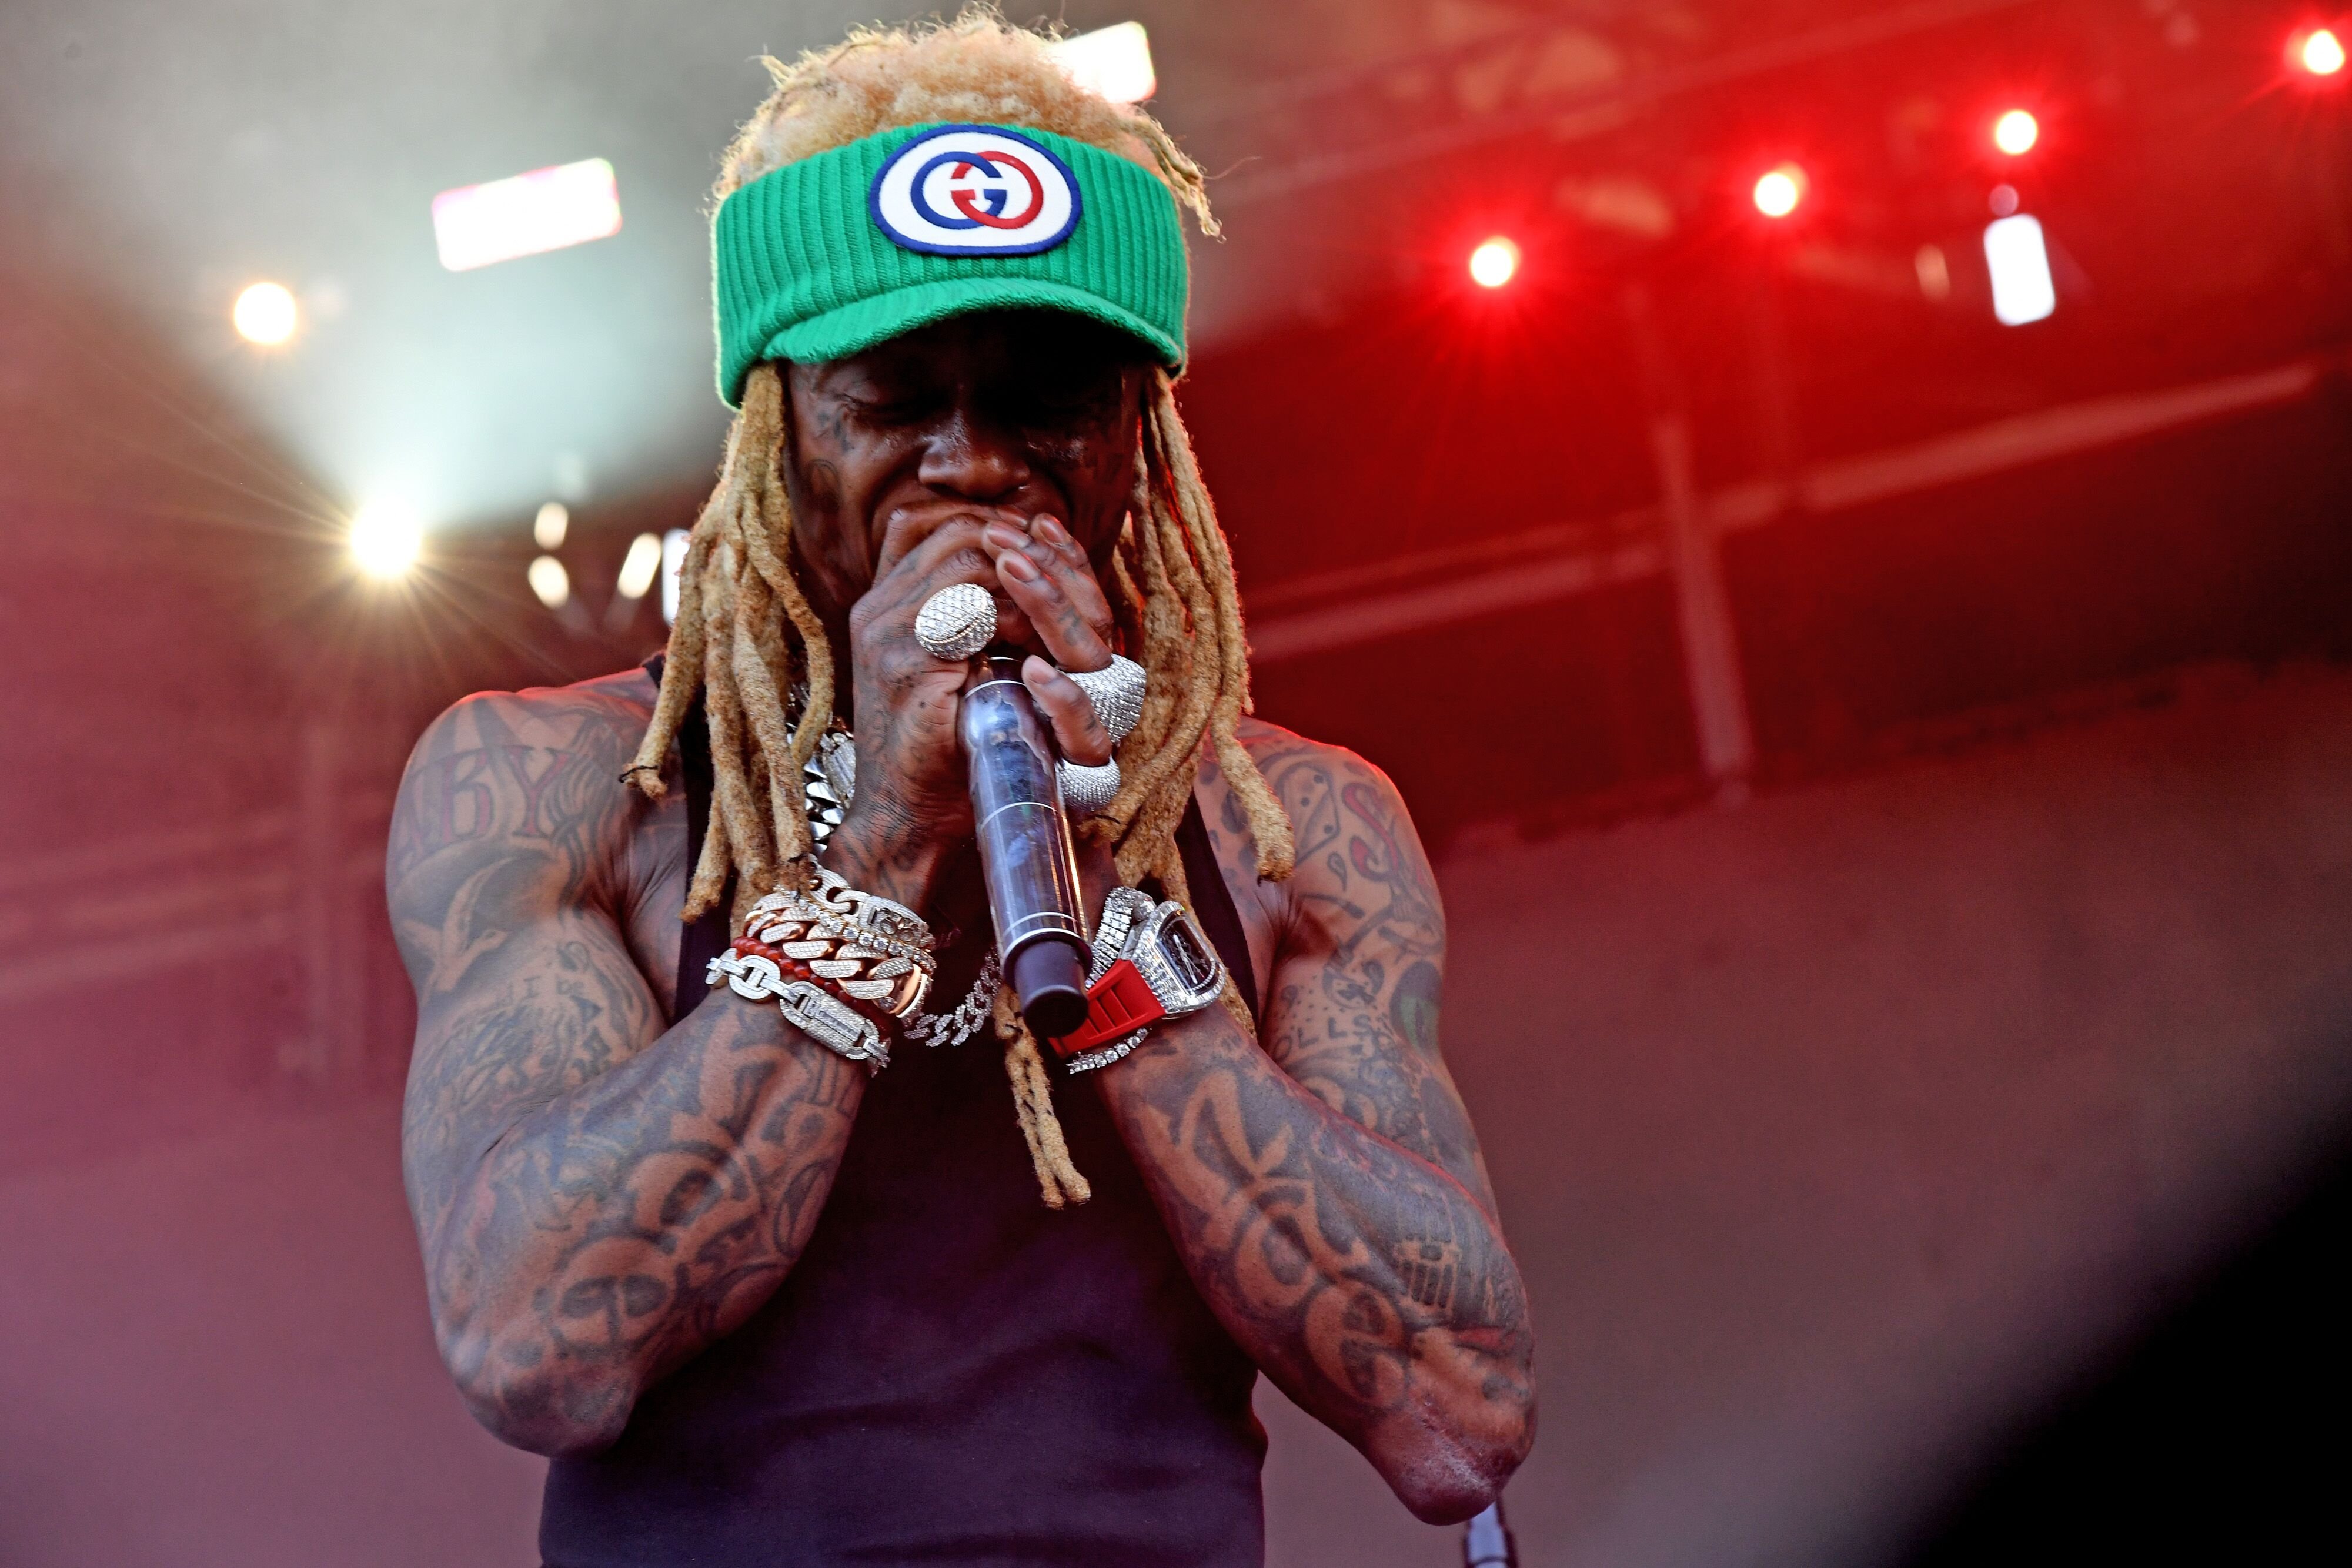 Lil Wayne performing onstage at a concert | Source: Getty Images/GlobalImagesUkraine